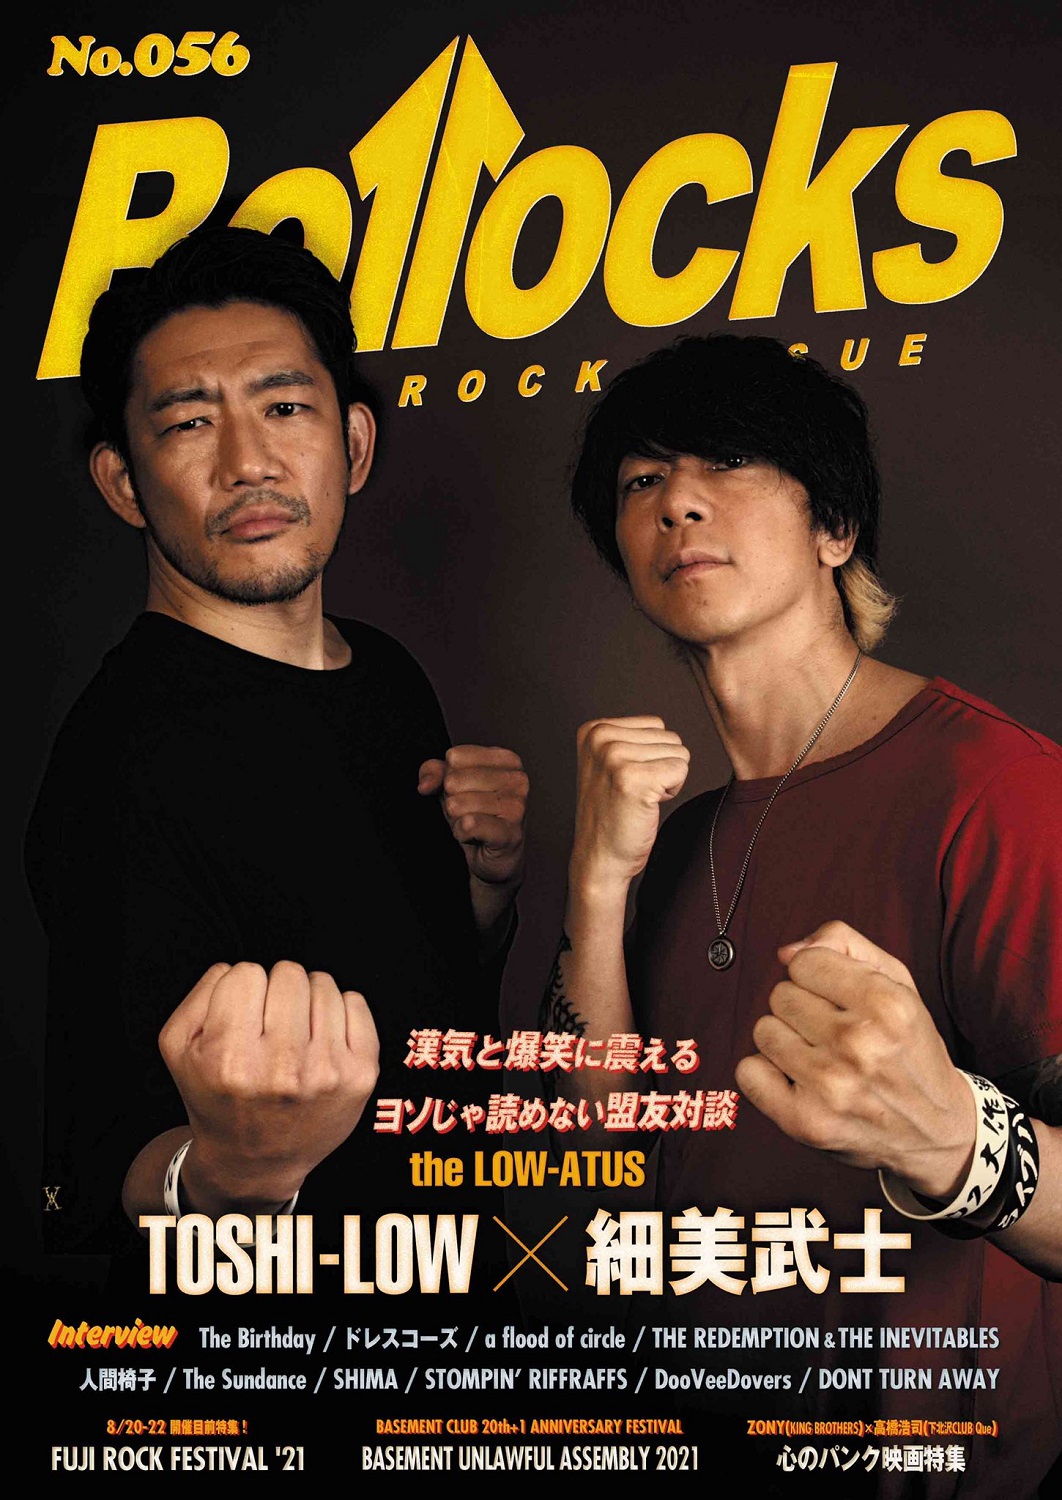 PUNK ROCK ISSUE [BOLLOCKS] no.056 2021年7月30日発売